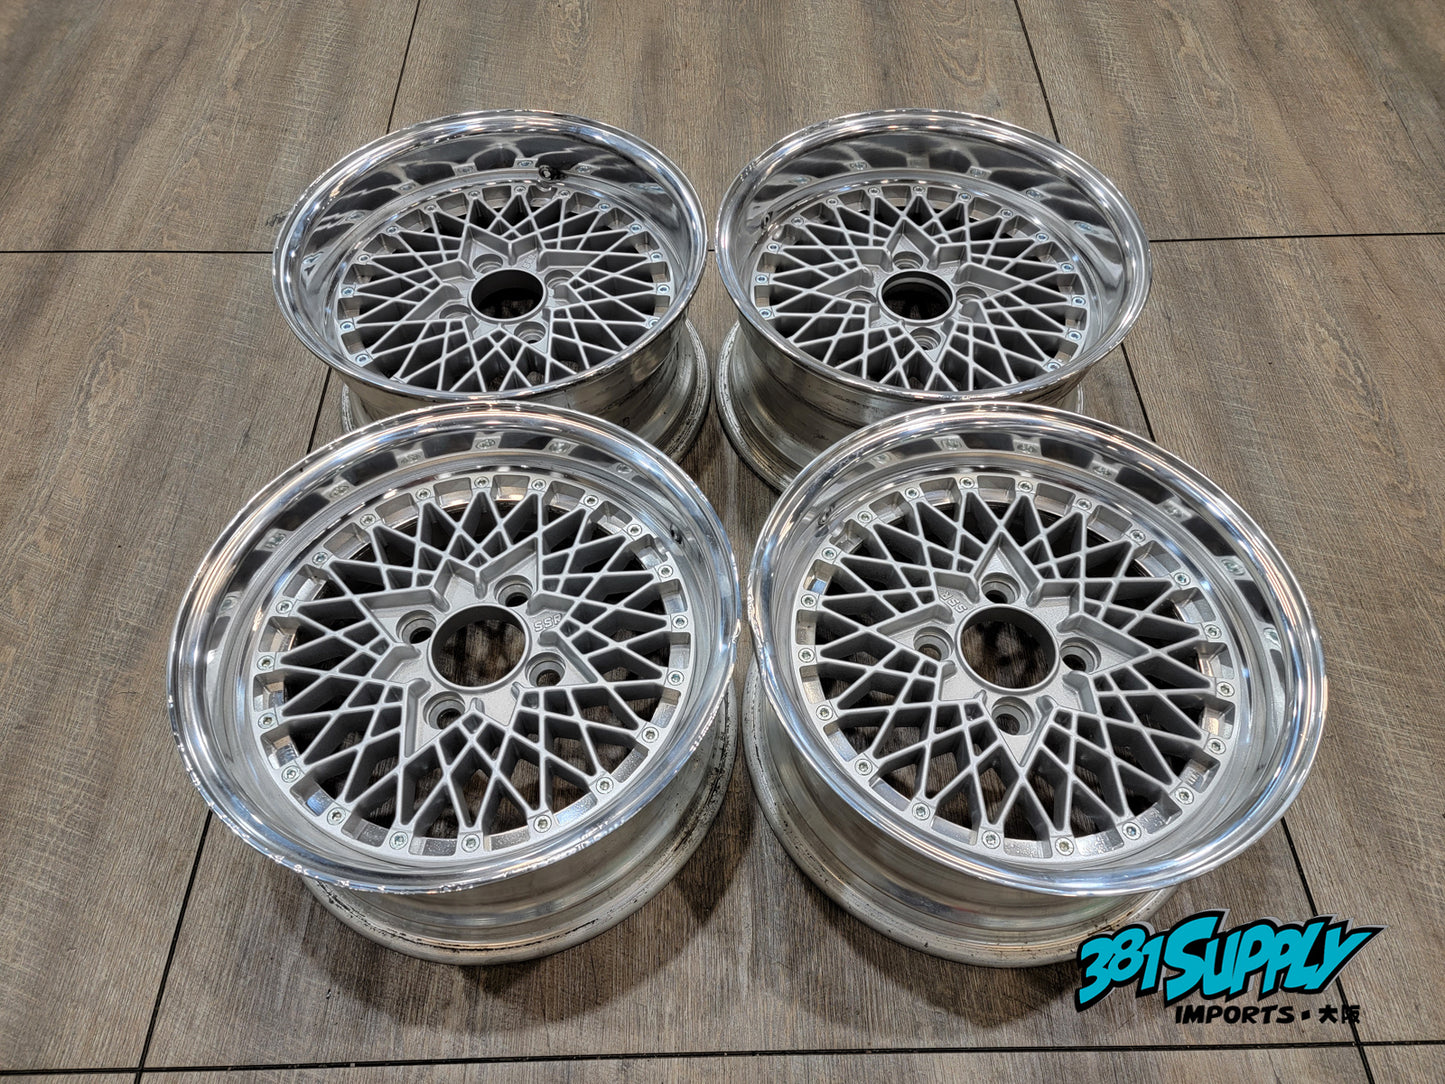 SSR Reverse Mesh Wheels Speed Star Racing 4x114.3 15x7 +1 +13 AE86 R32 Skyline S13 240SX Drift Spares